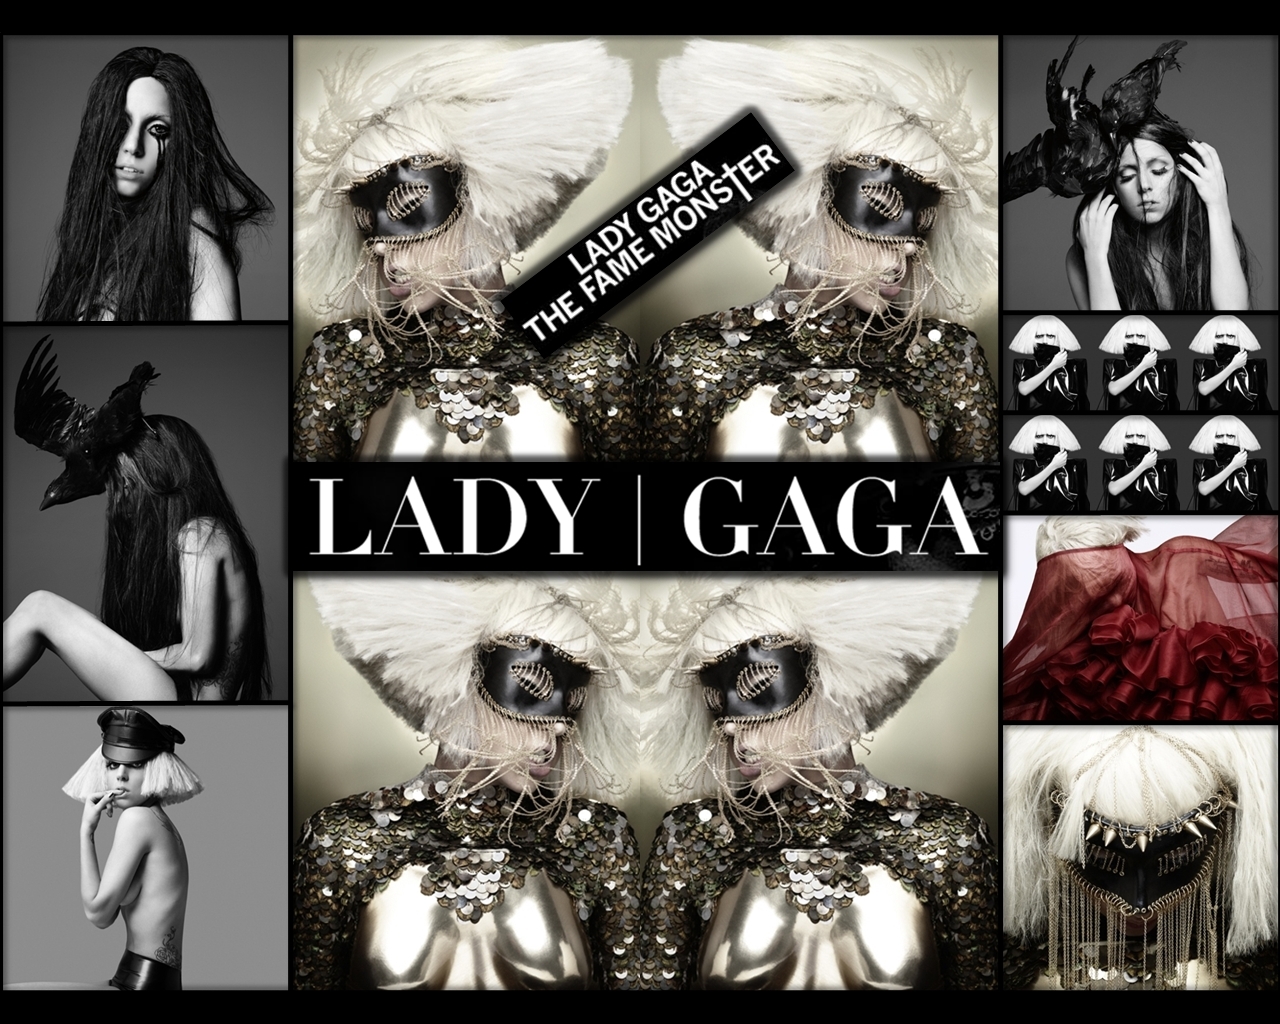 Леди гага на английском. The Fame леди Гага. Леди Гага frame Monster. Lady Gaga the Fame Monster album. Леди Гага коллаж.